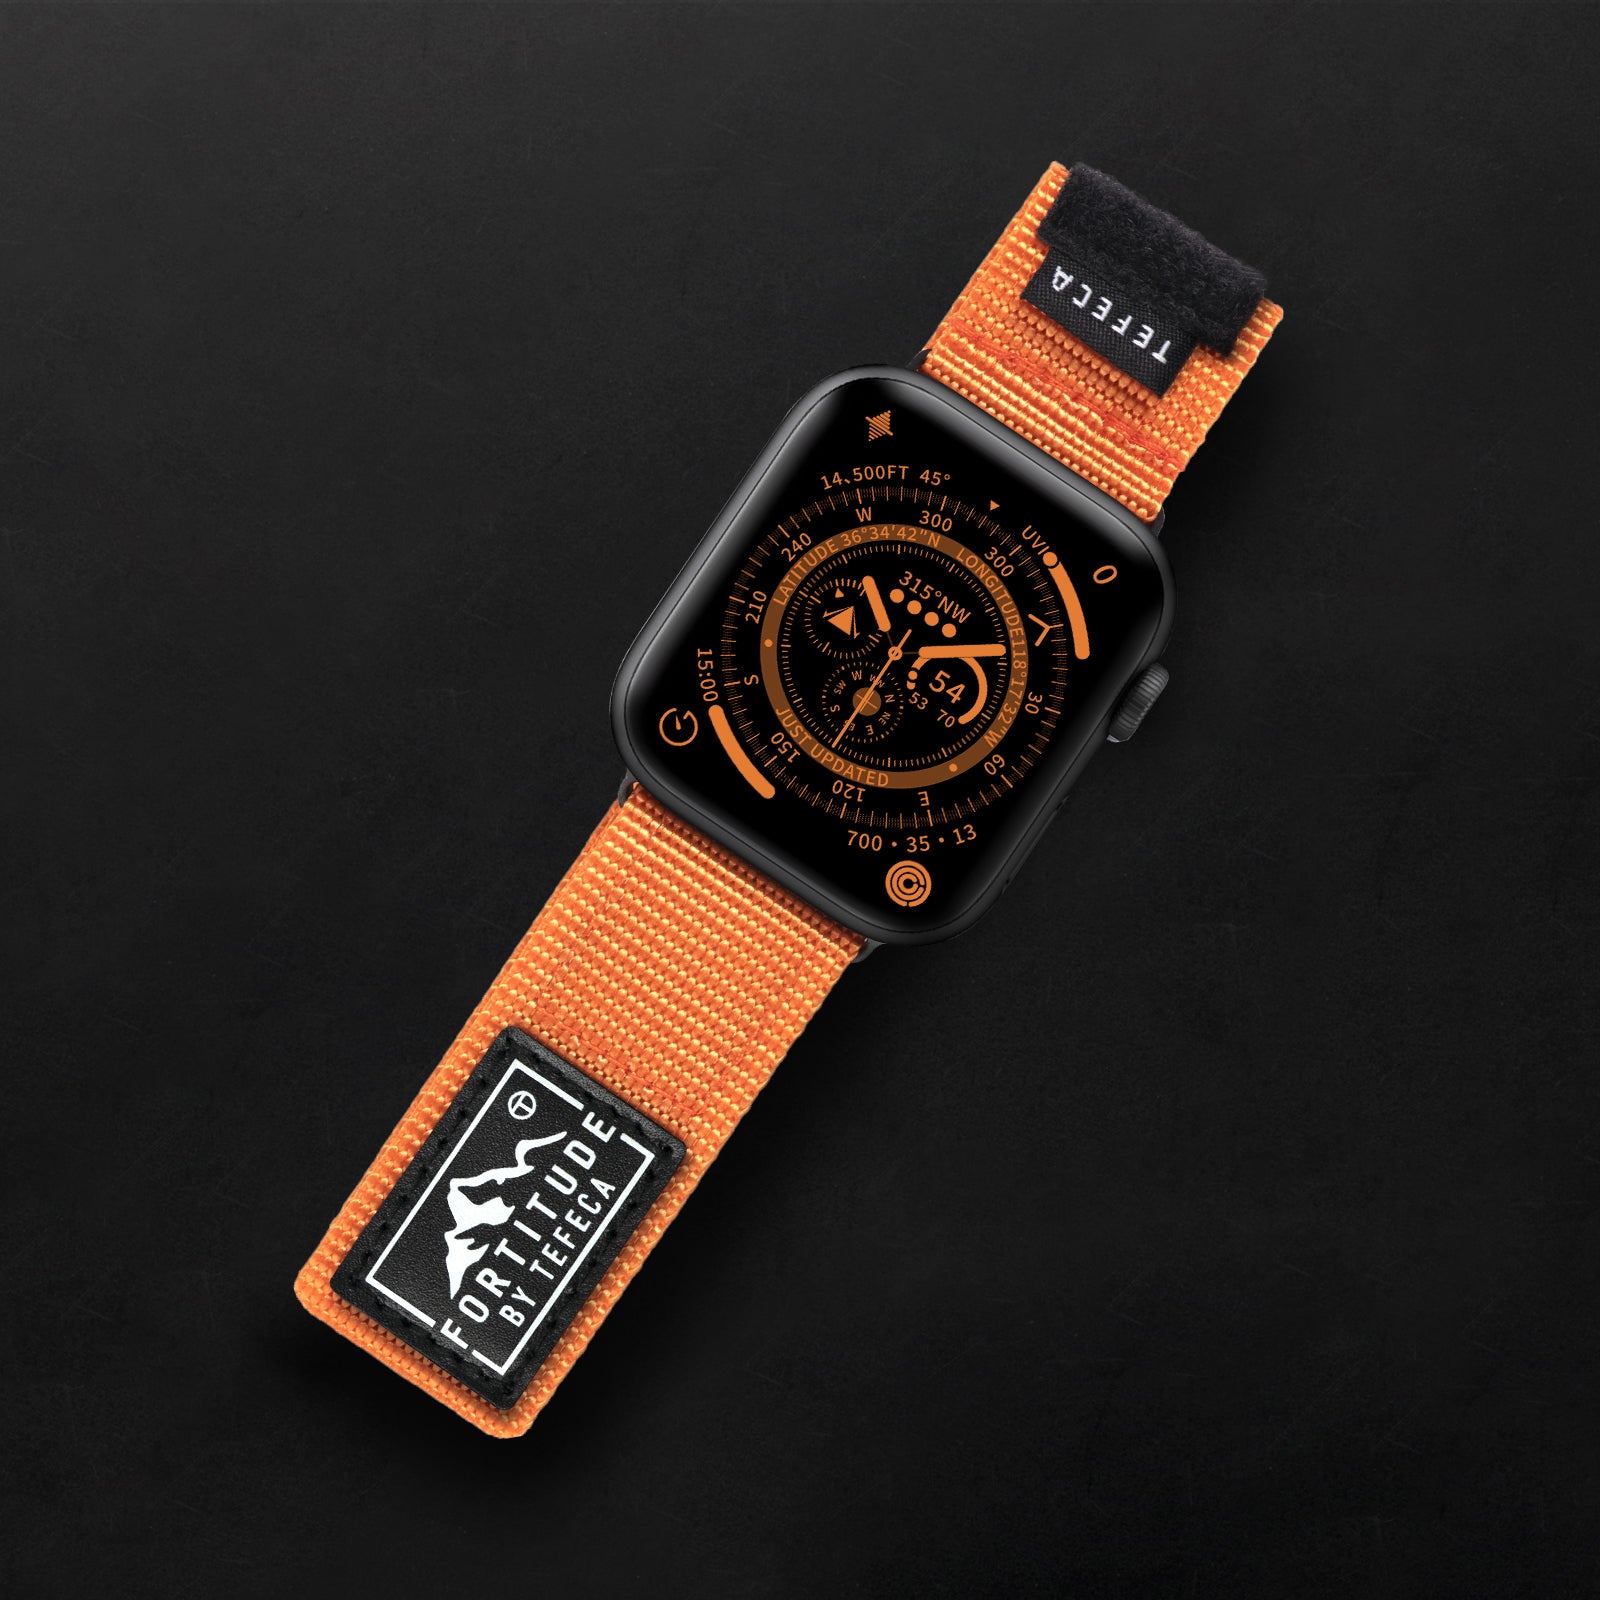 Tefeca Fortitude Series Standard Wide Hook and Loop Band for Apple Watch /Apple Watch Ultra|  Light Orange Nylon